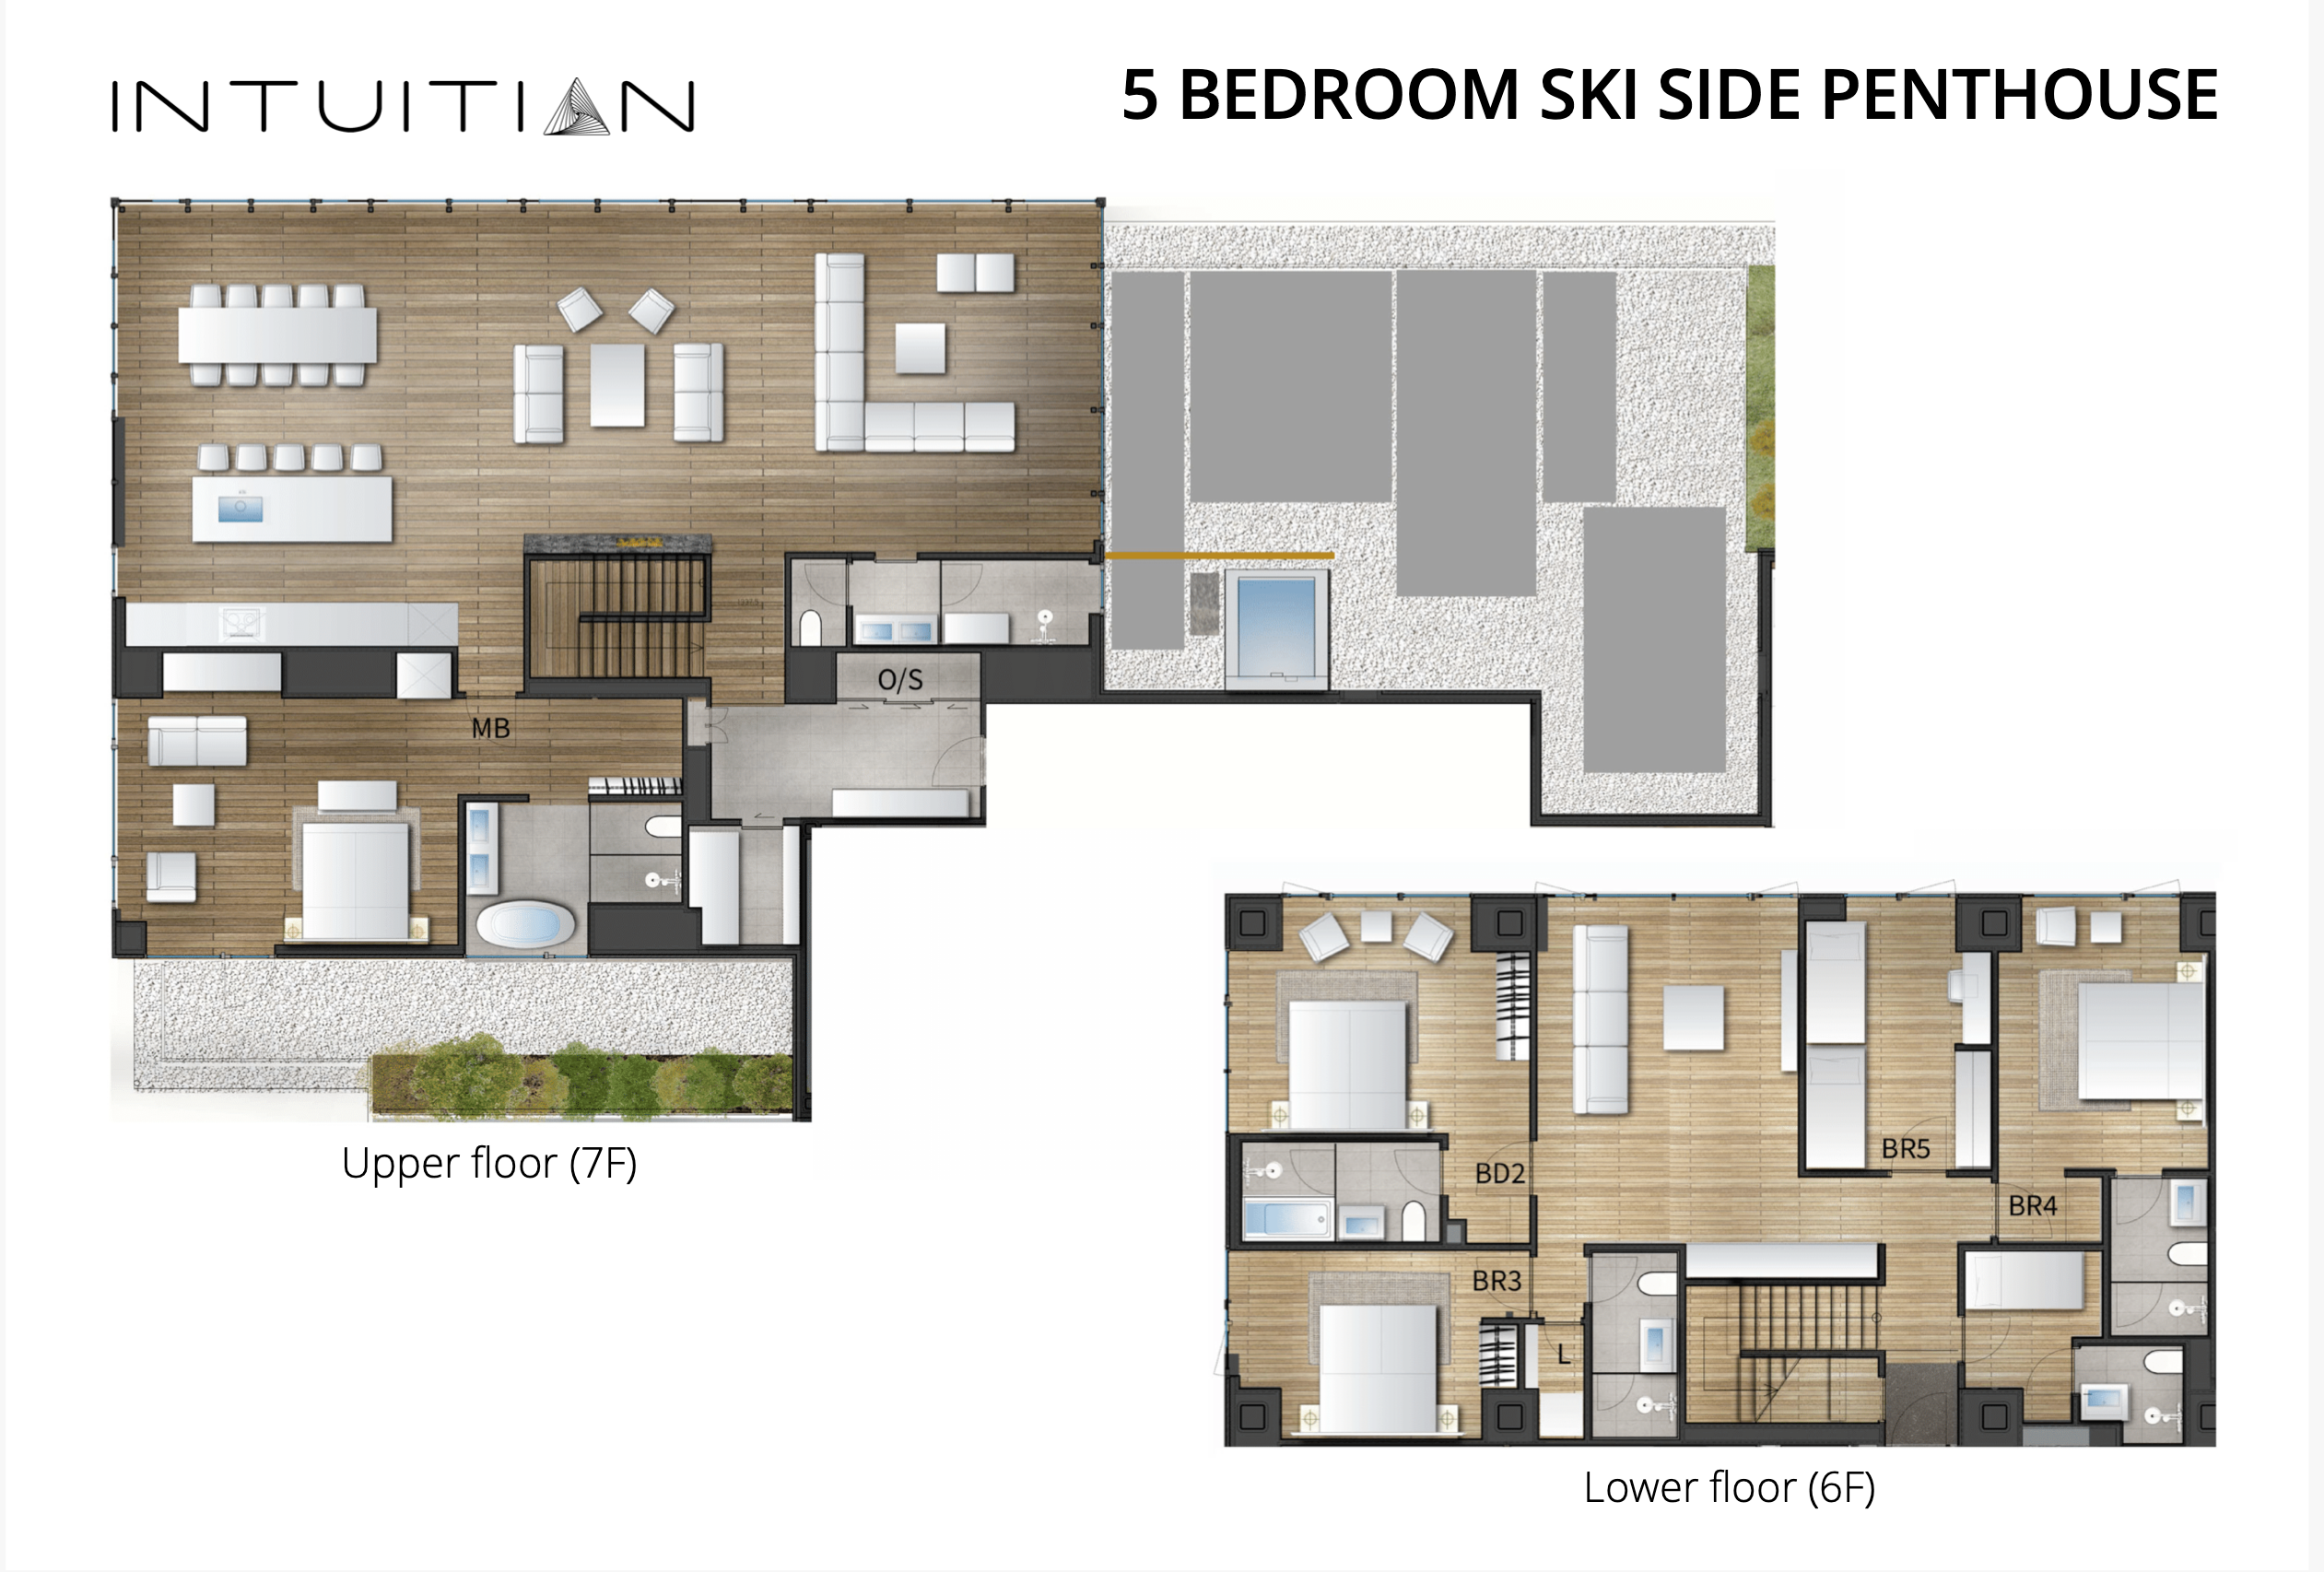 Intuition Niseko_5 bedroom ski side penthouse_floor plan